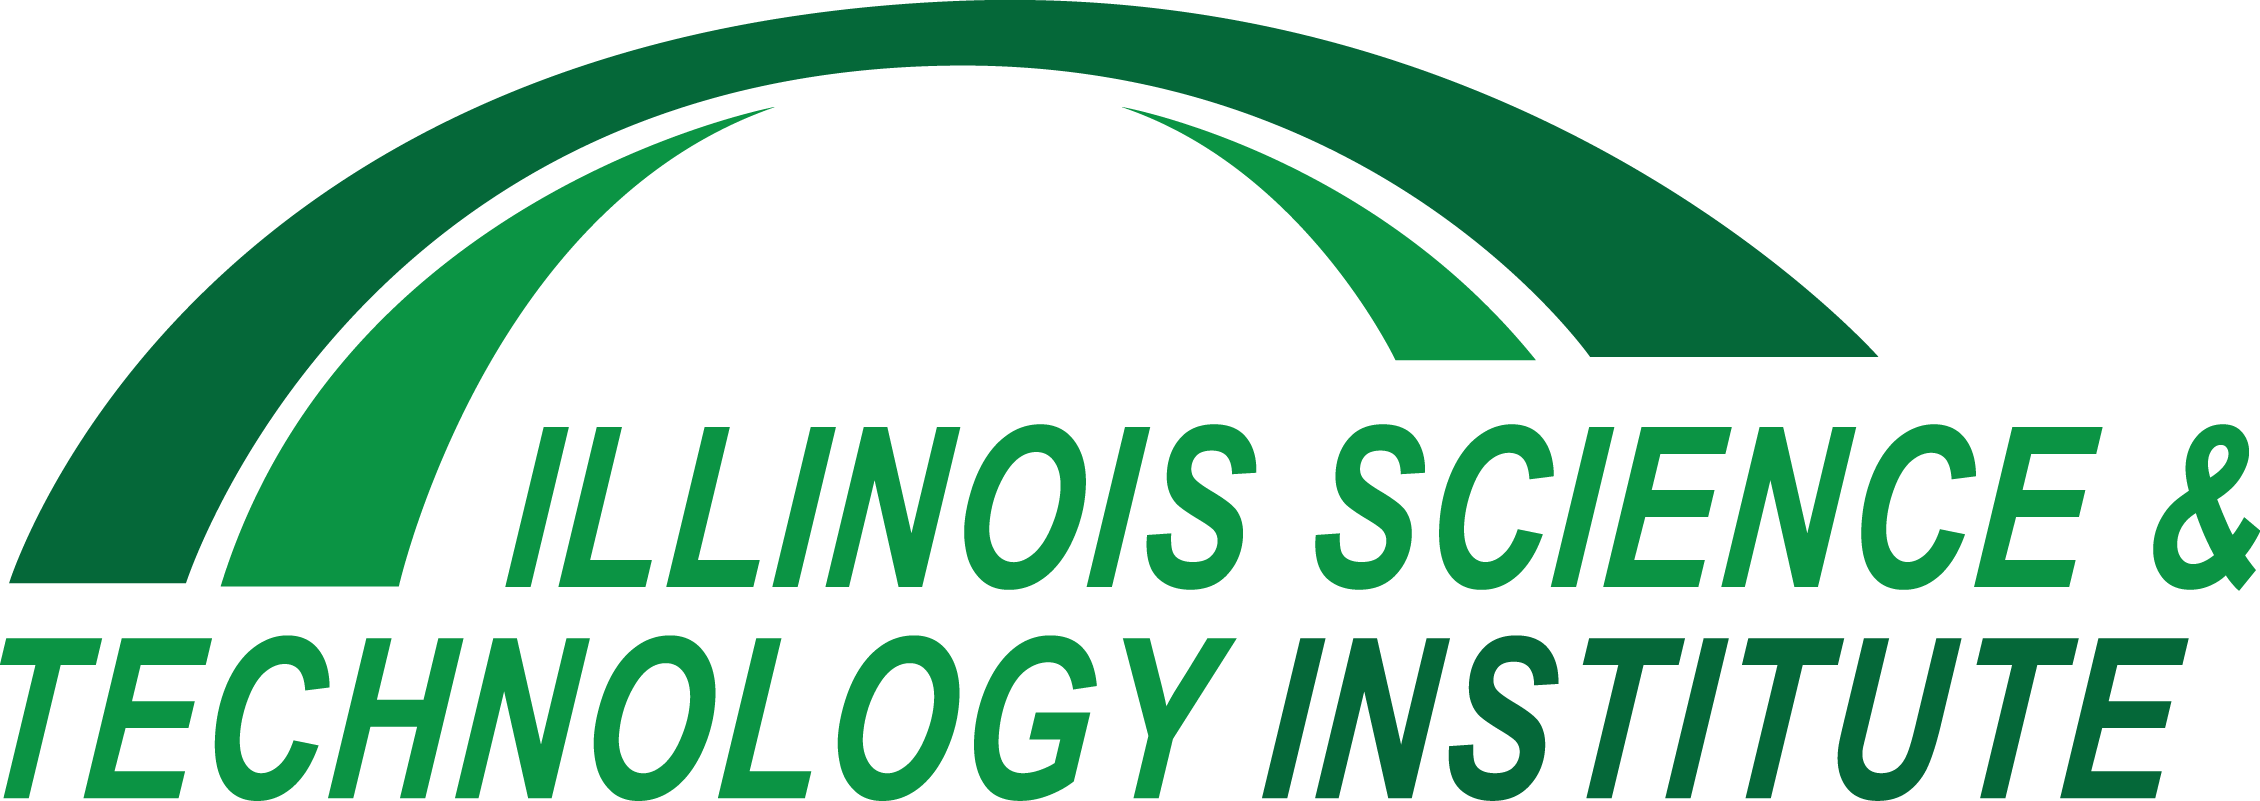 Illinois Science Technology & Institute logo v4  Copy  Illinois